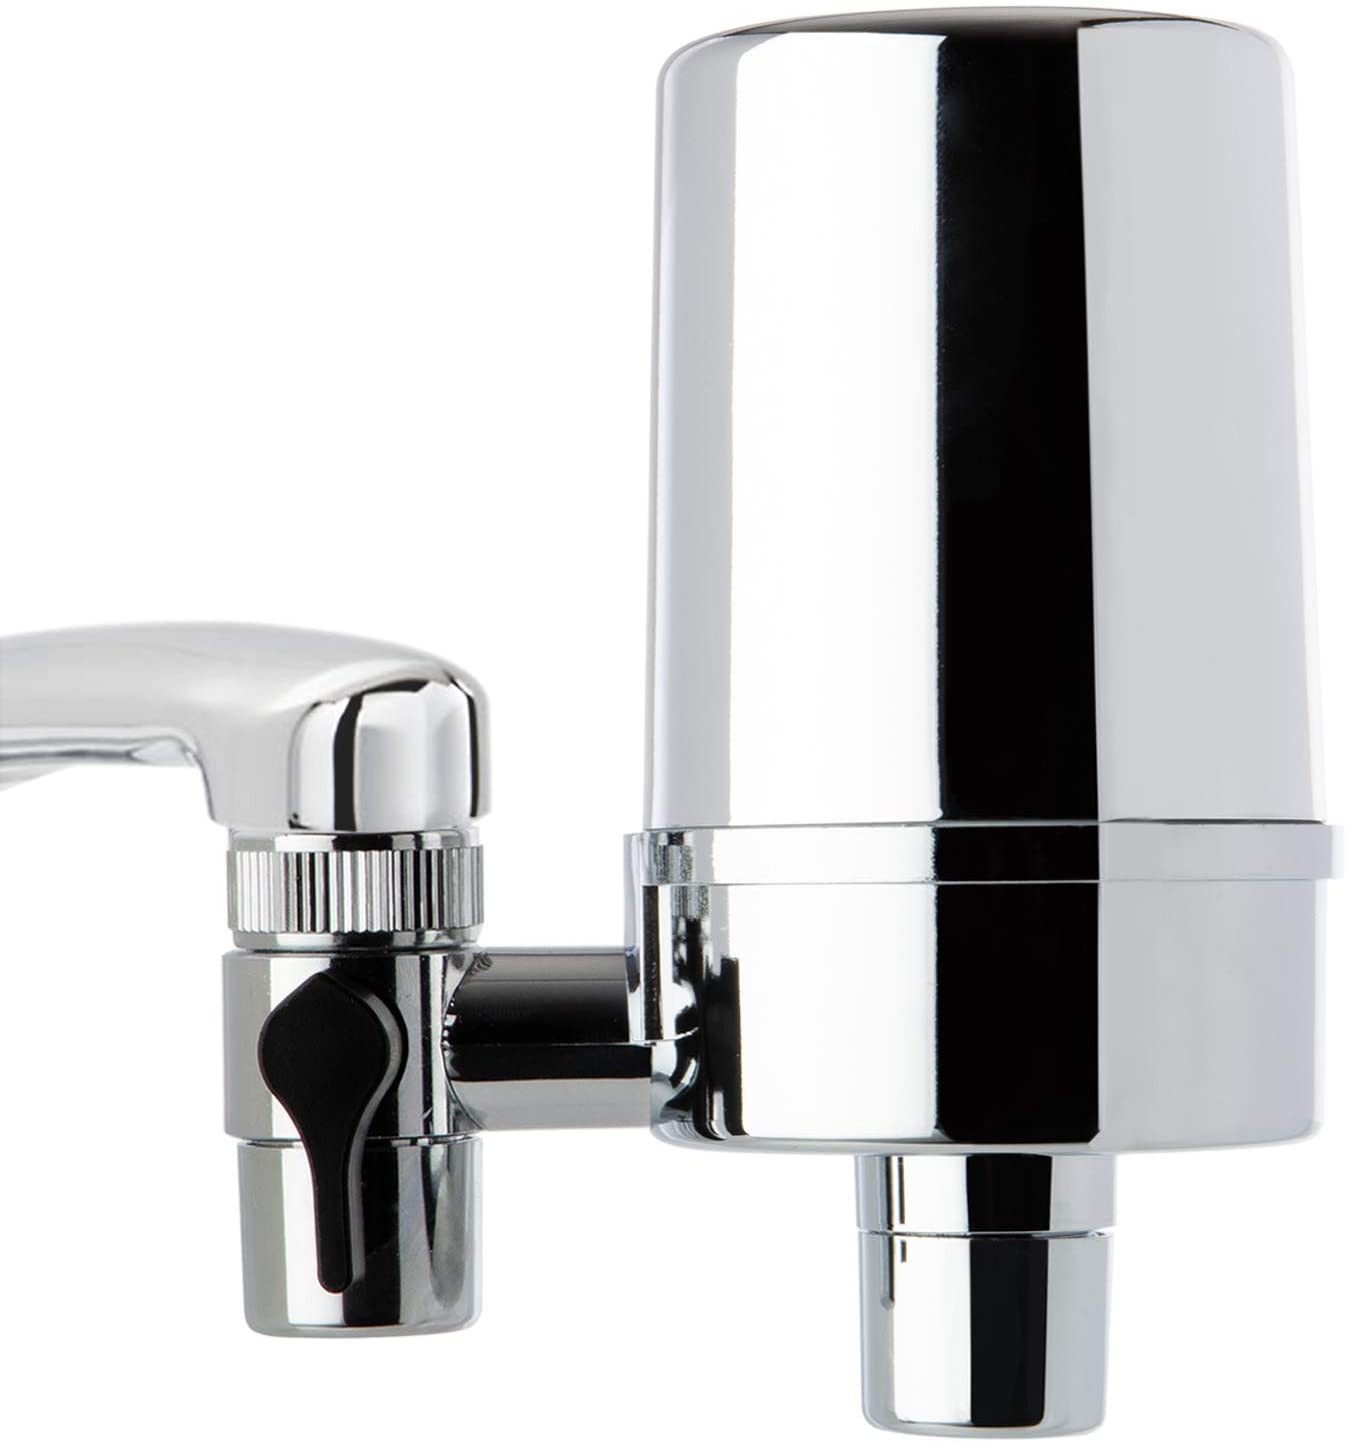 Ispring df2 chr faucet mount water filter